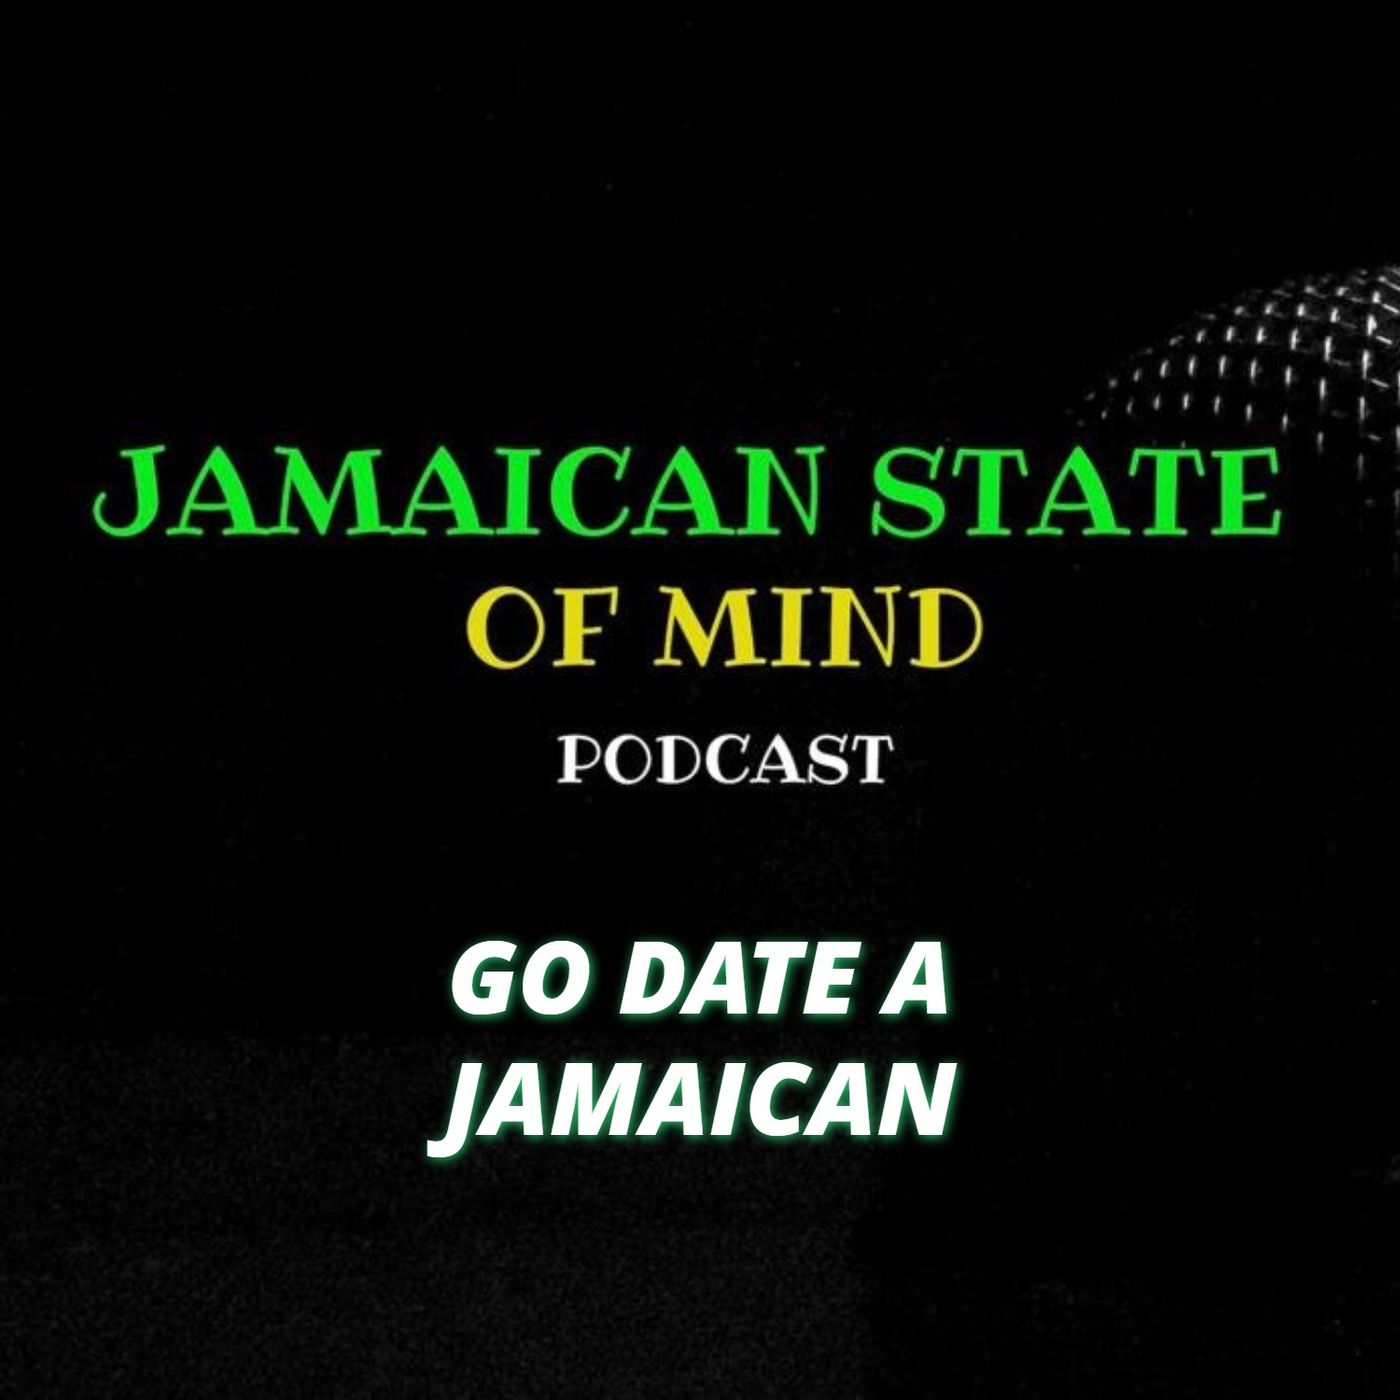 Go date a Jamaican!